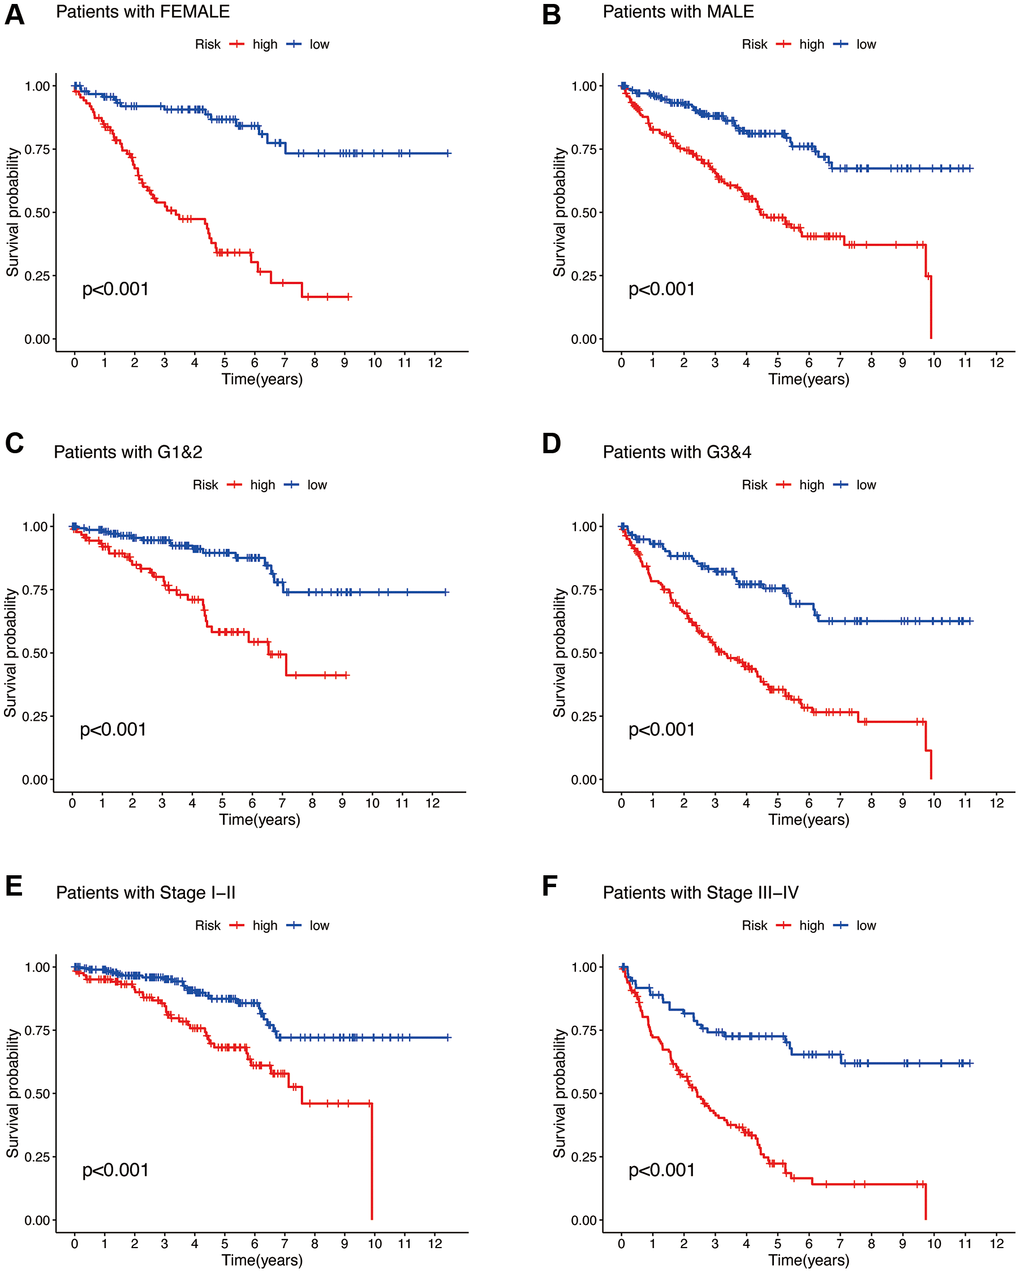 Clinical subgroup analysis of the risk model. Gender (A, B). Tumor grading (C, D). Tumor staging (E, F).